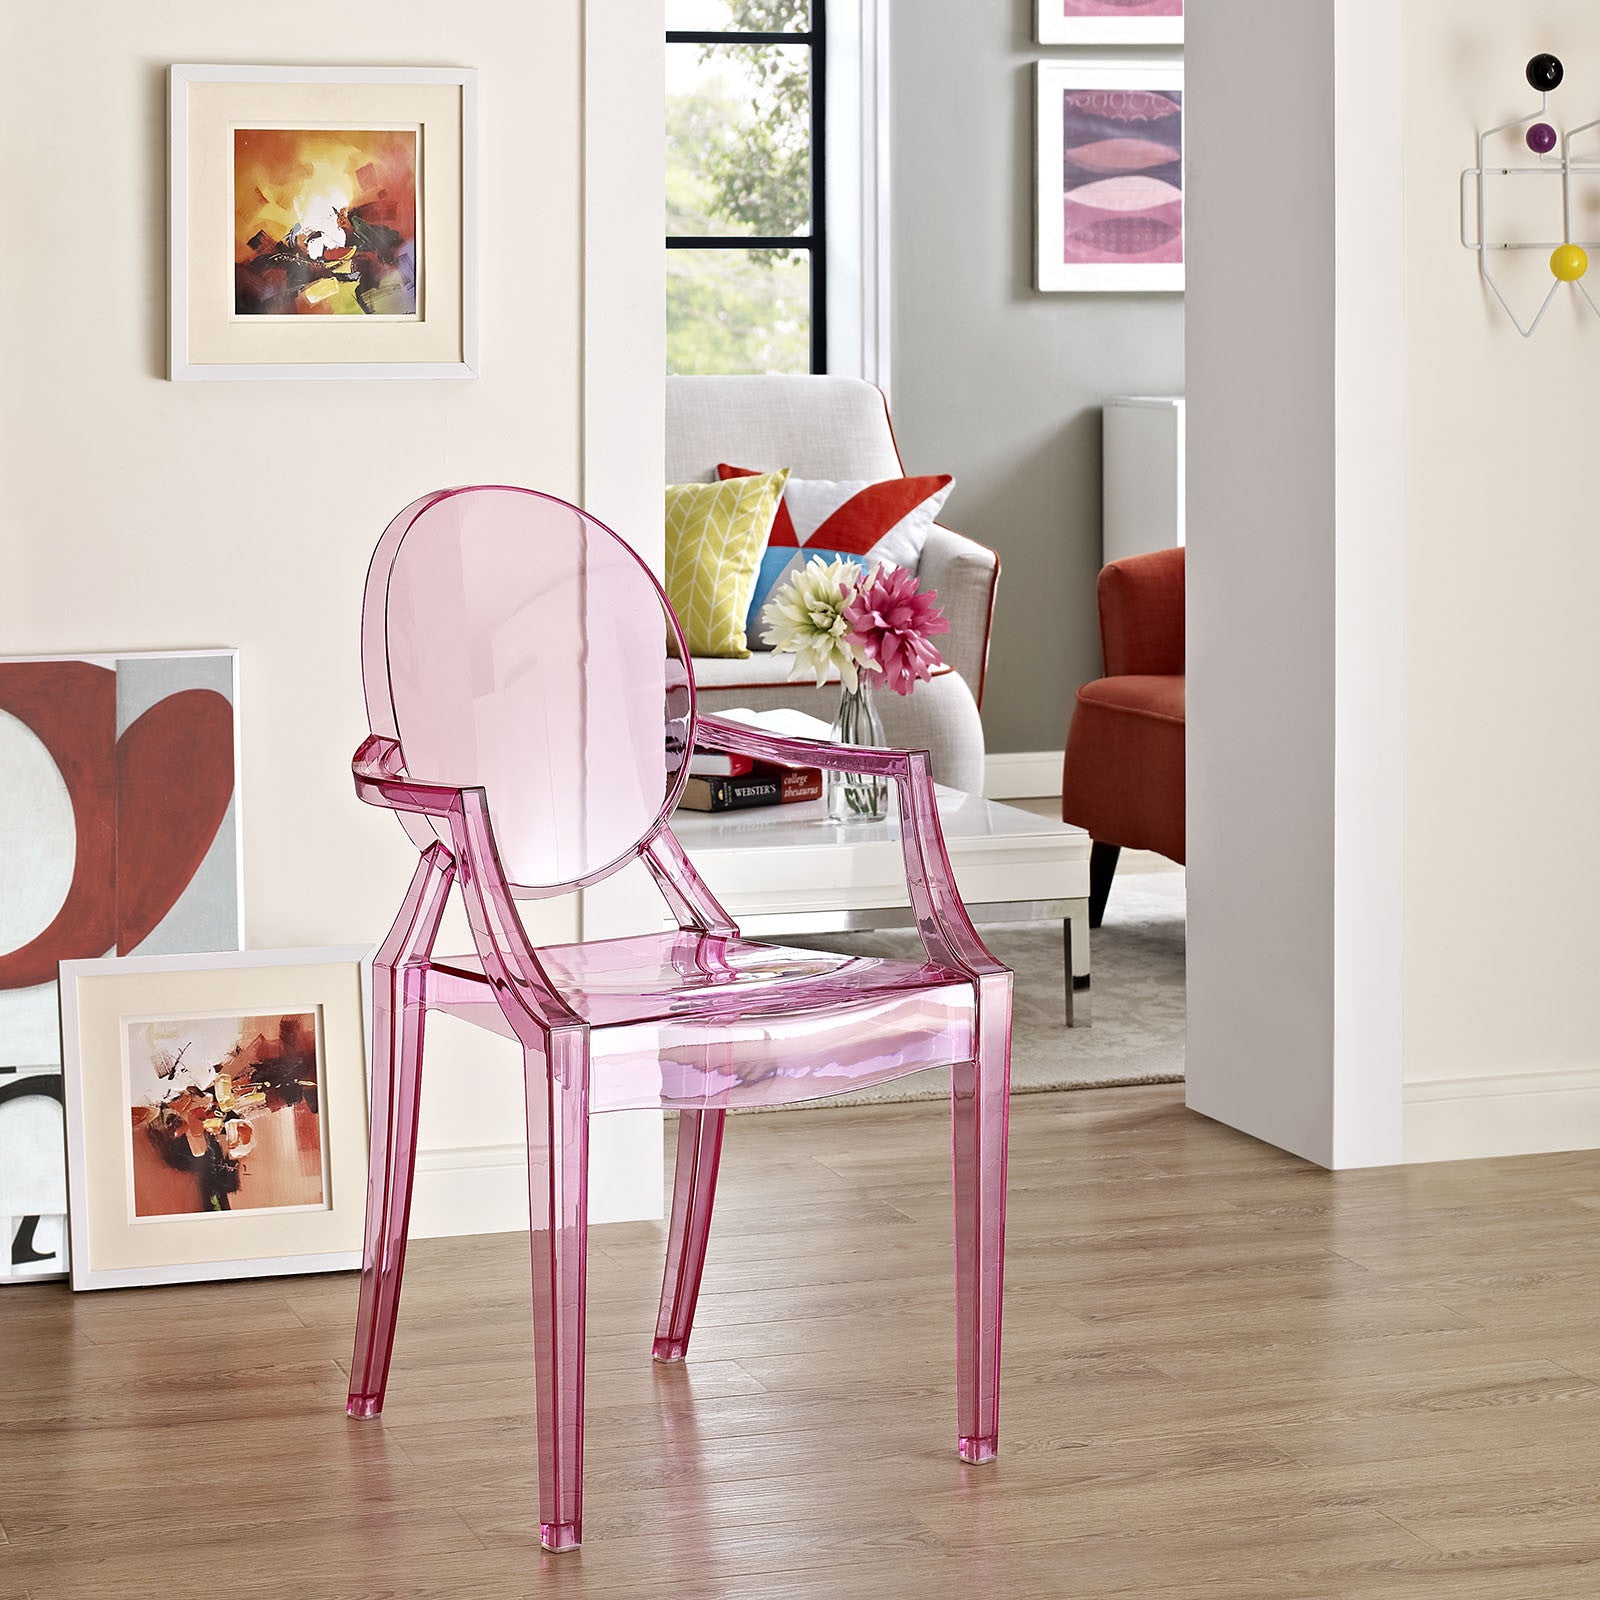 Clary Armchair Pink